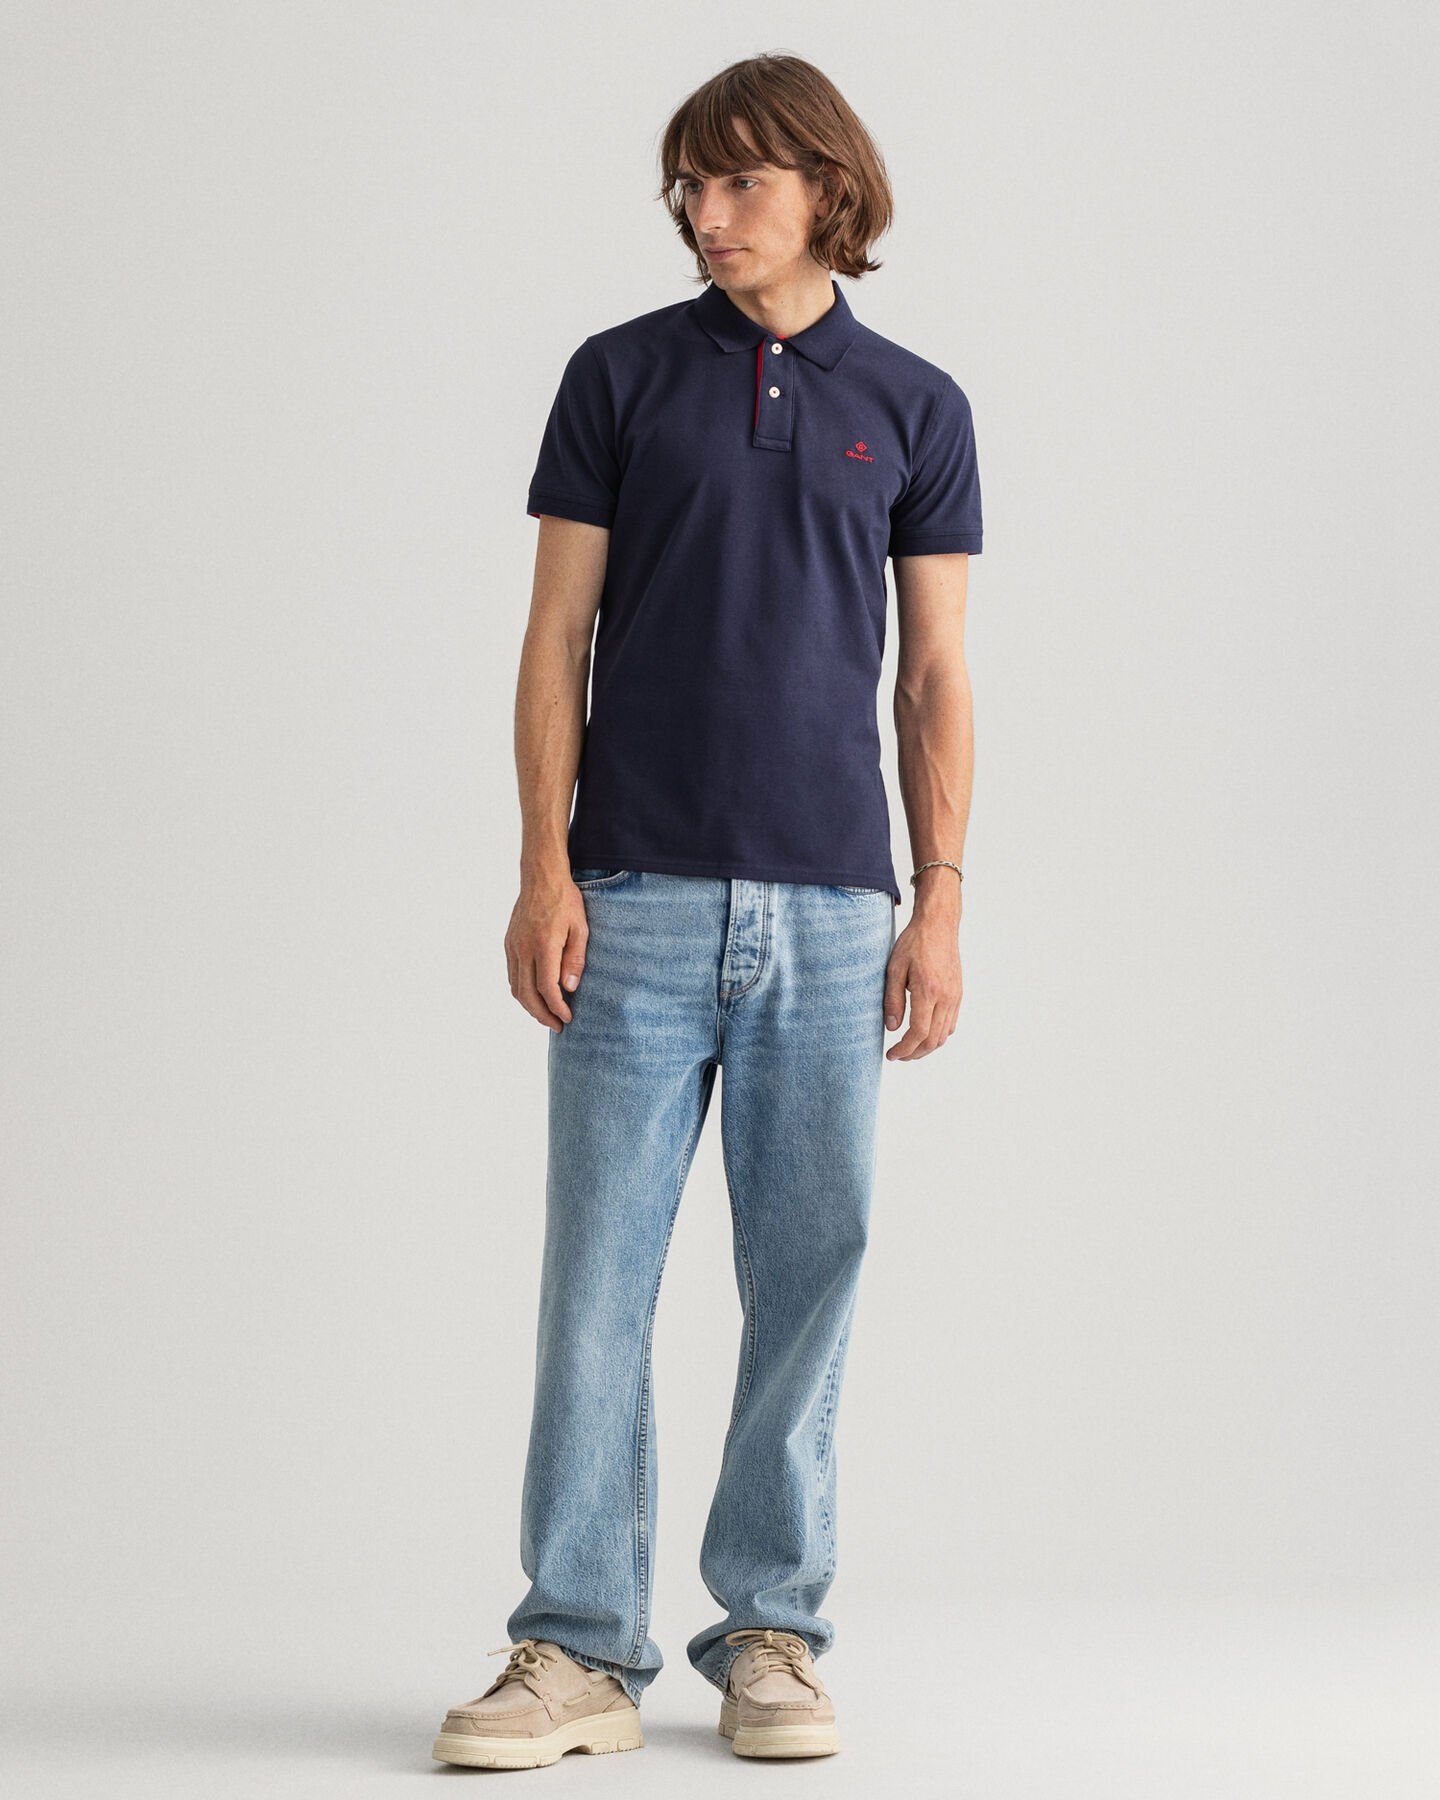 Gant Shirt kontrastfarbener Poloshirt Piqué Poloshirt Rugger mit Dunkelblau